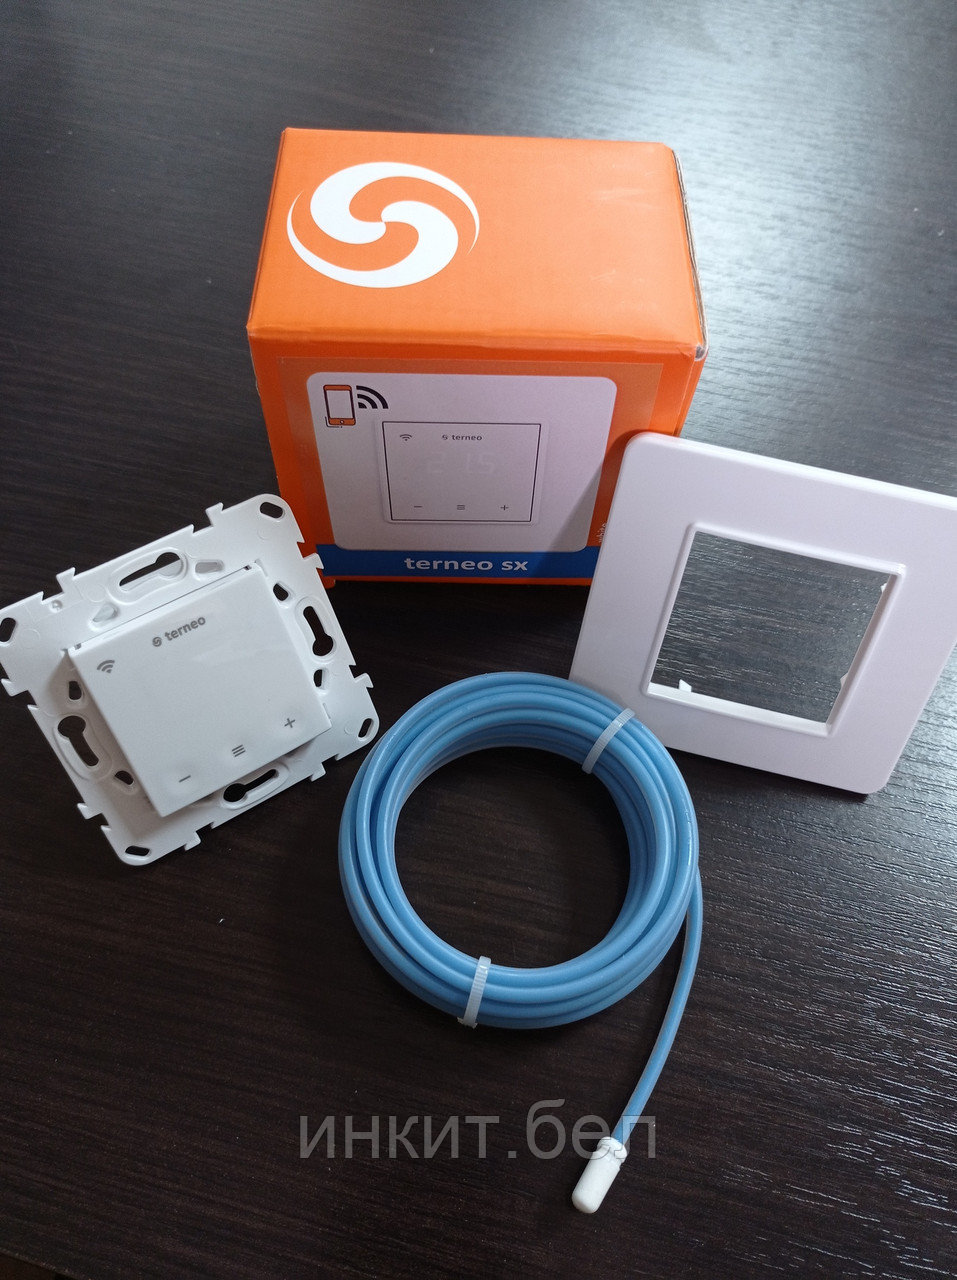 Wi-Fi терморегулятор Terneo sx, белый